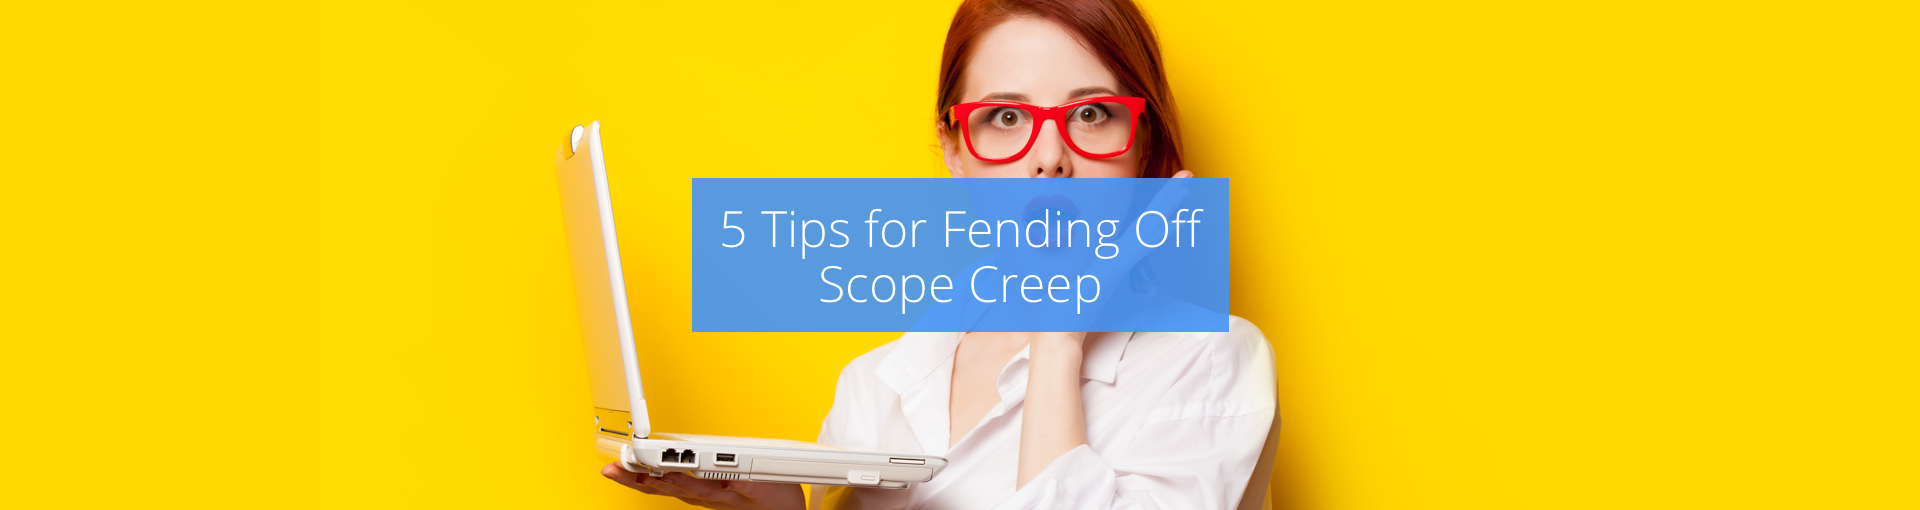 5 Tips for Fending Off Scope Creep